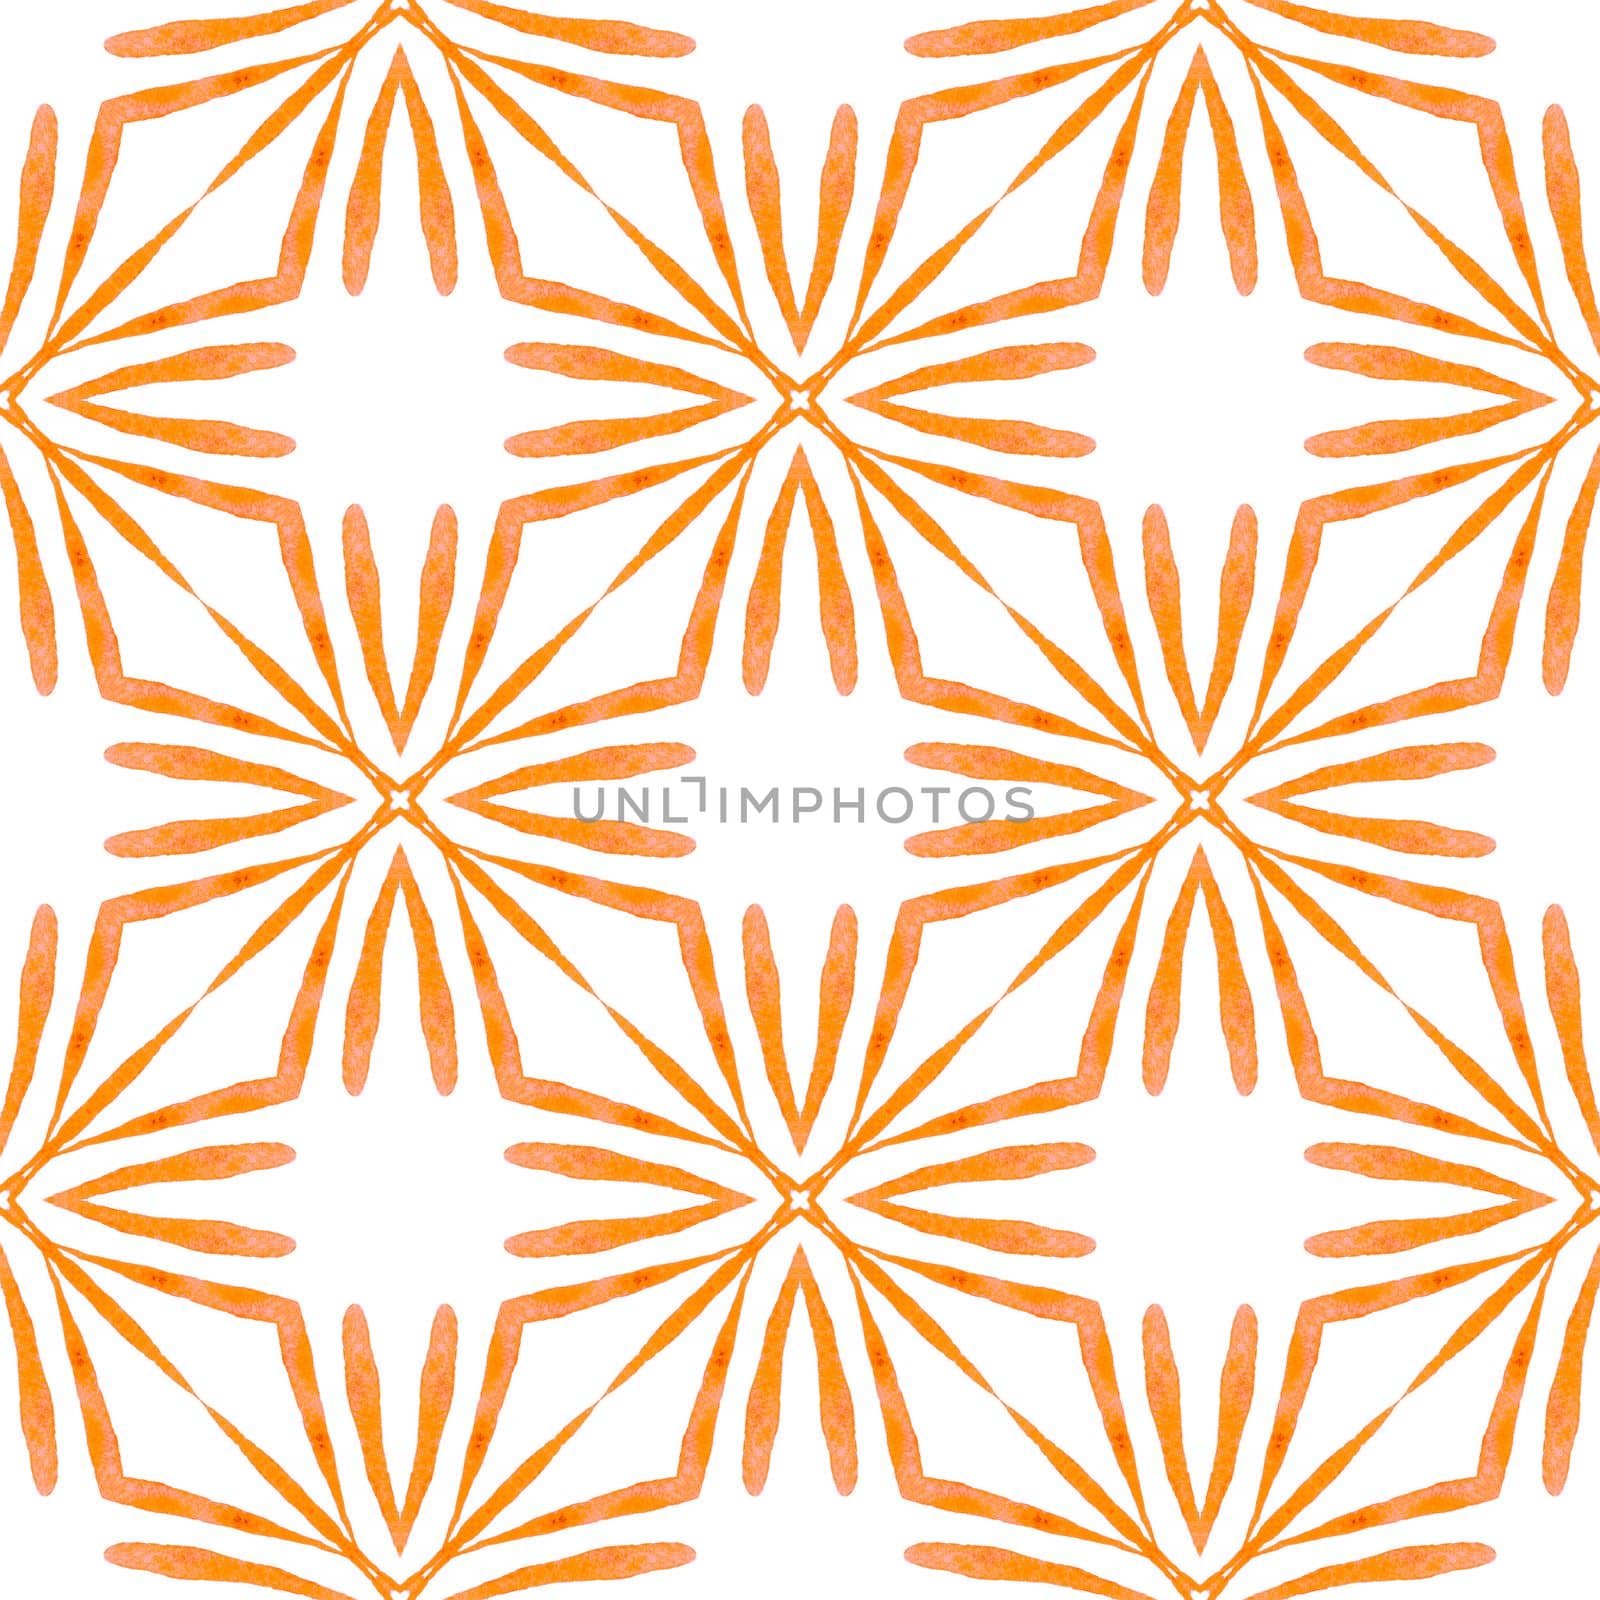 Textile ready fresh print, swimwear fabric, wallpaper, wrapping. Orange original boho chic summer design. Oriental arabesque hand drawn border. Arabesque hand drawn design.